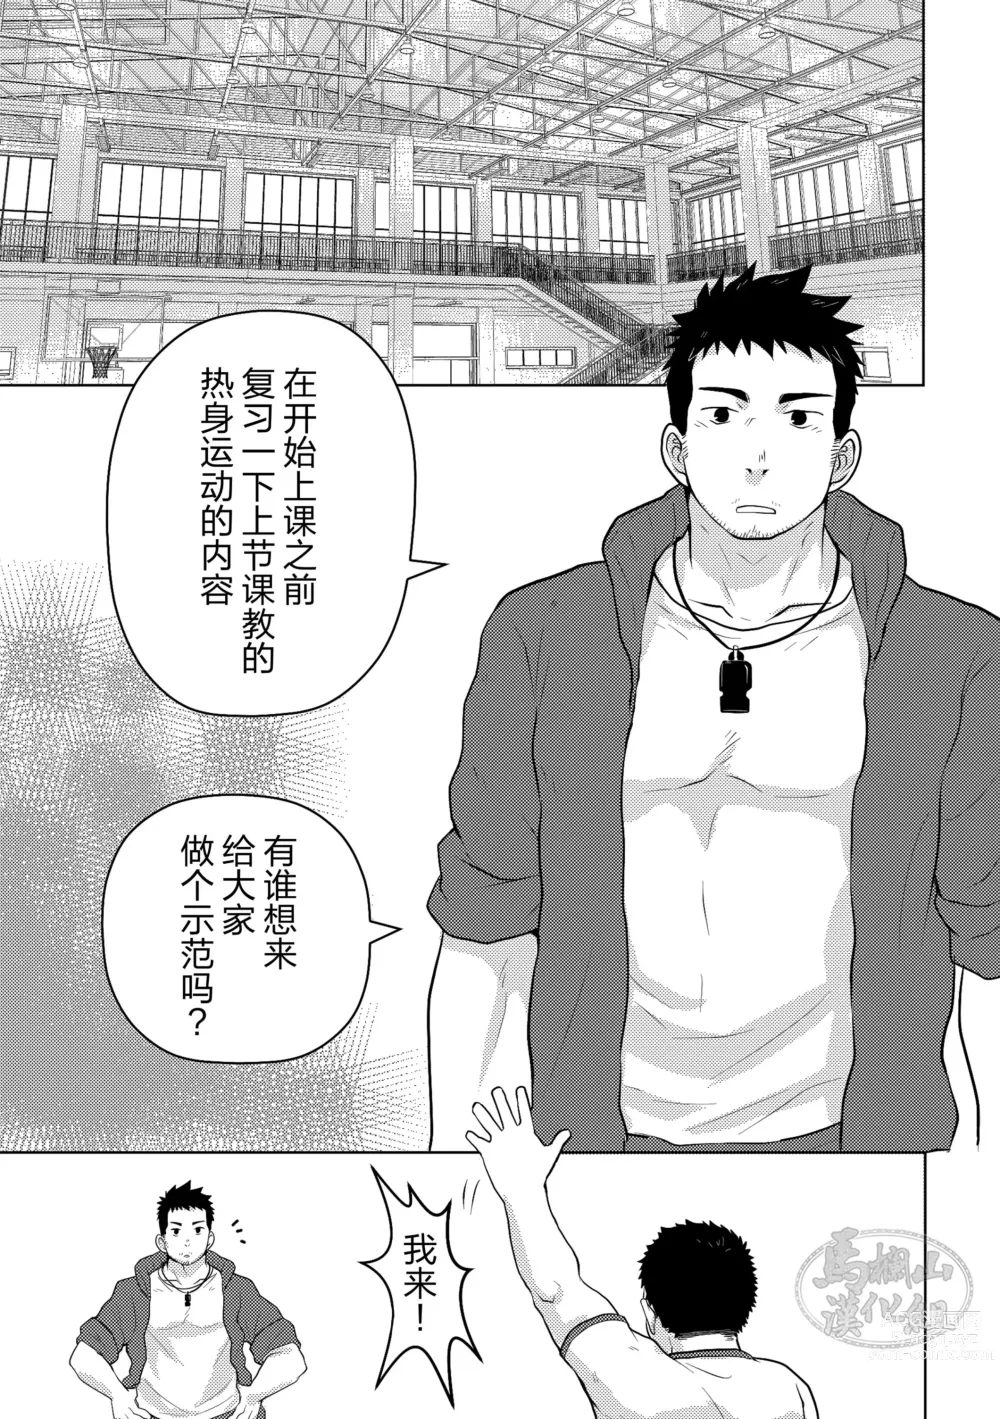 Page 4 of manga 汗だく体育